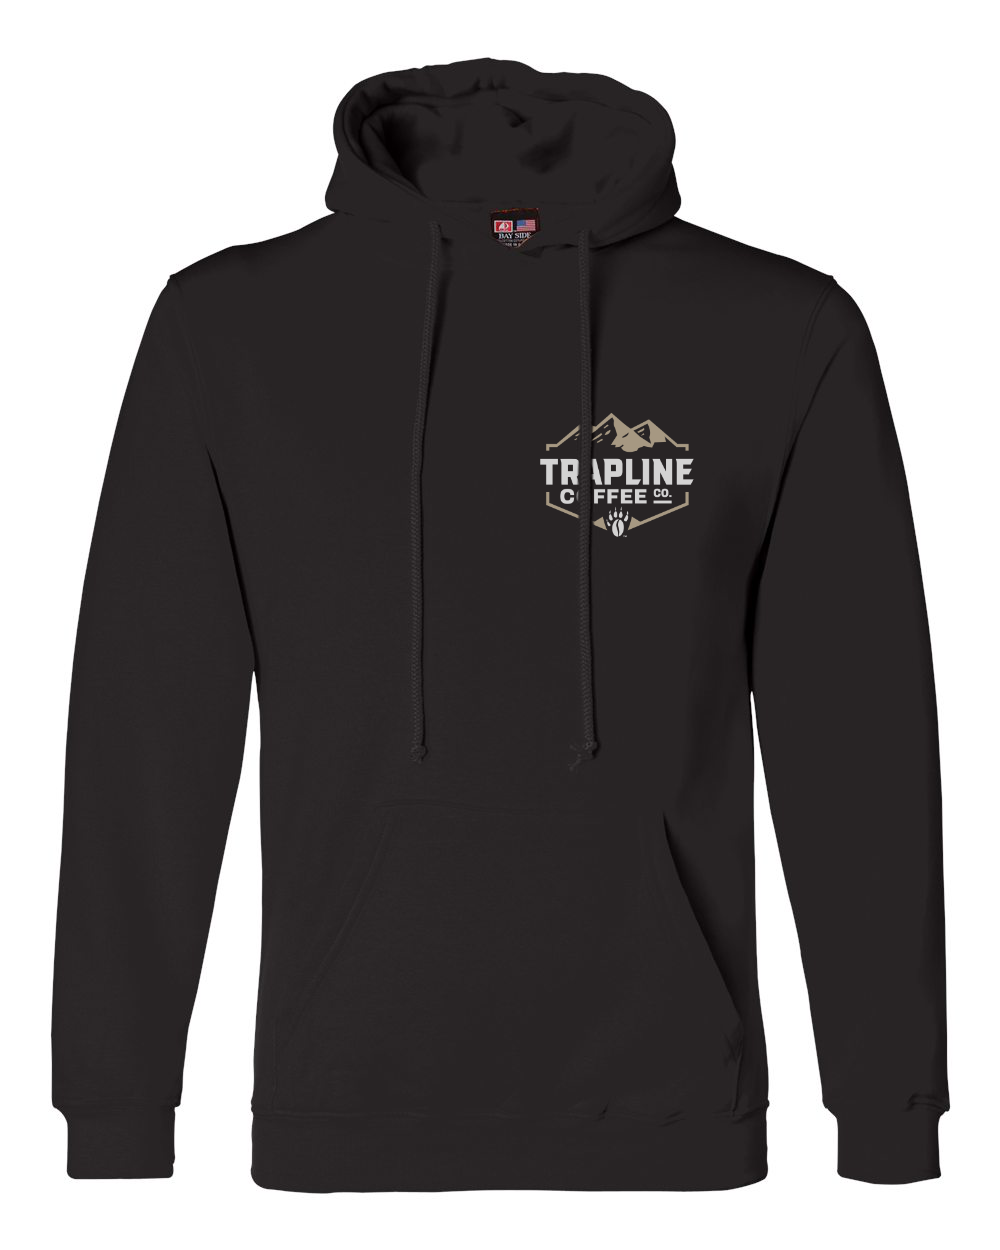 Trapline Coffee Co. Hoodie - Small Chest Logo